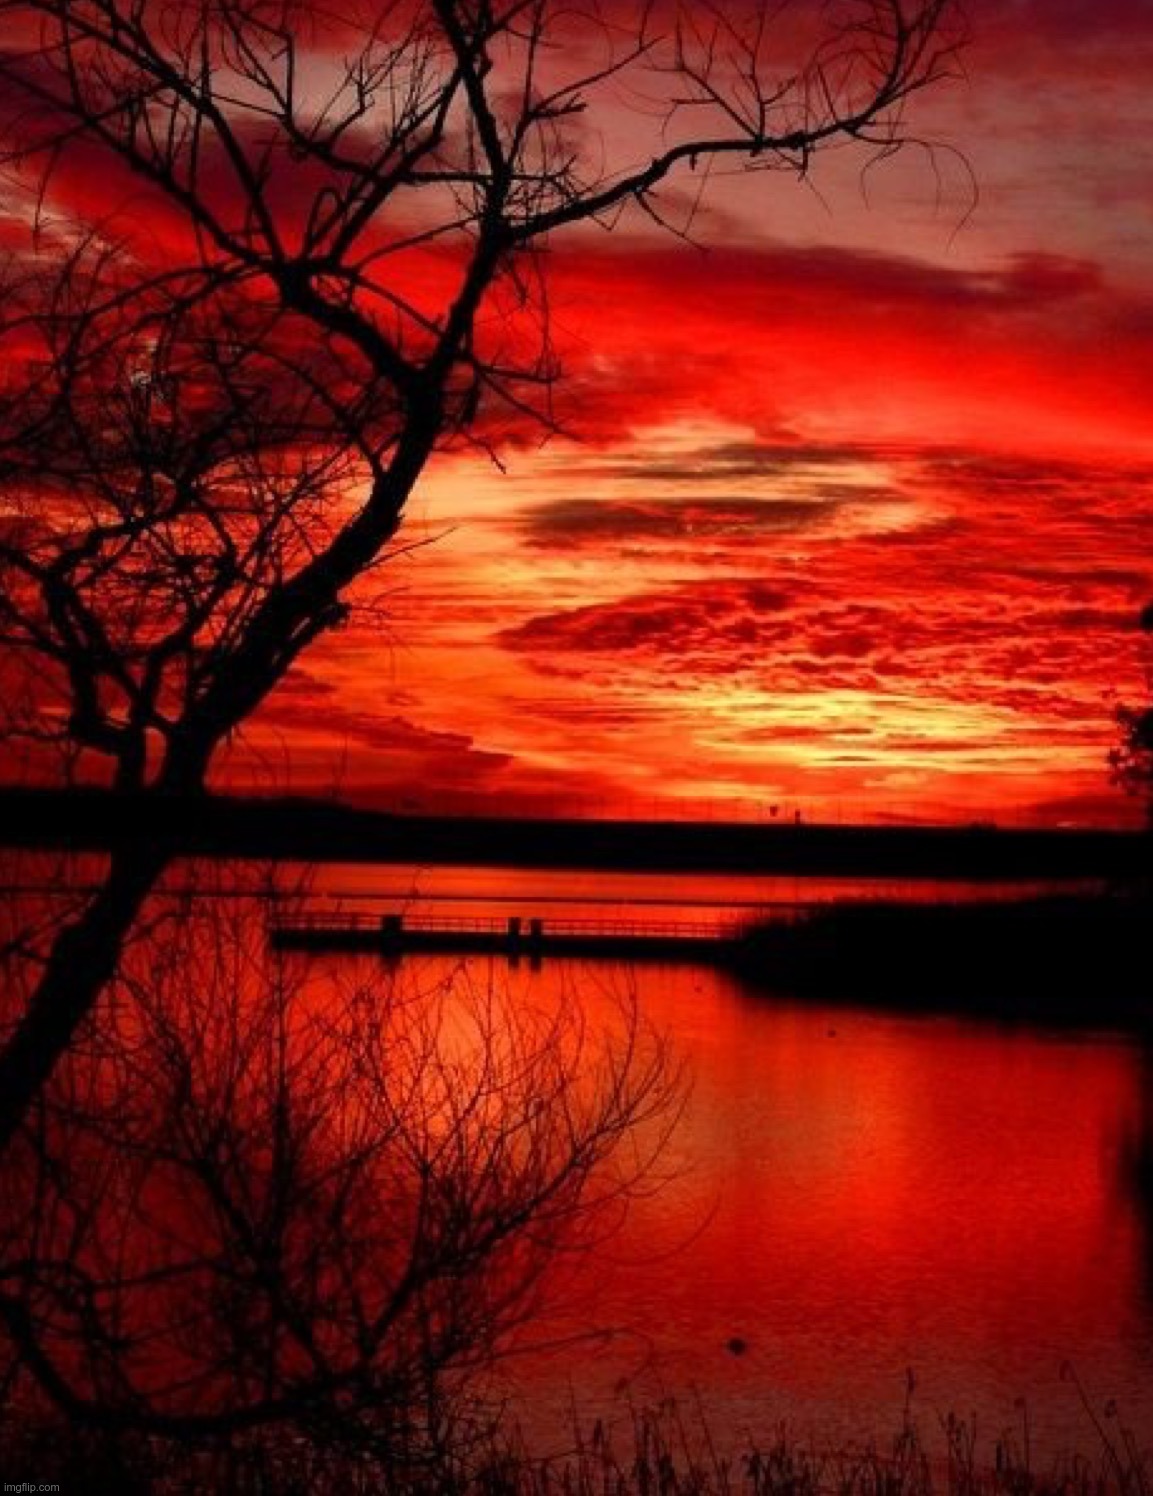 Red and Orange Sunset on Lake | image tagged in landscape_images,landscapes,rick75230 | made w/ Imgflip meme maker